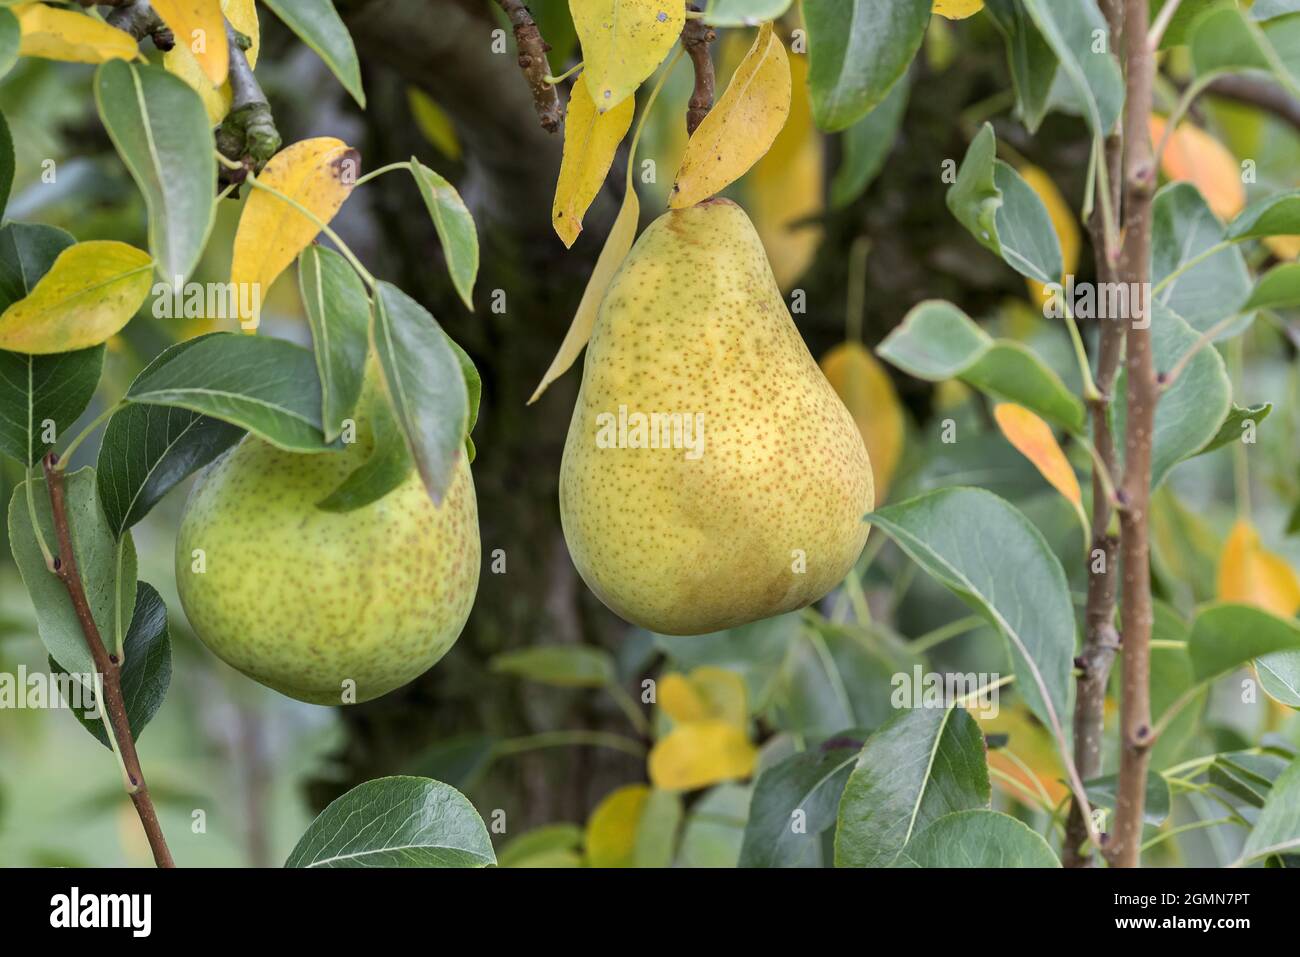 Common pear (Pyrus communis 'Gruene Hoyerswerder', Pyrus communis Gruene Hoyerswerder), pear on a tree, cultivar Gruene Hoyerswerder Stock Photo